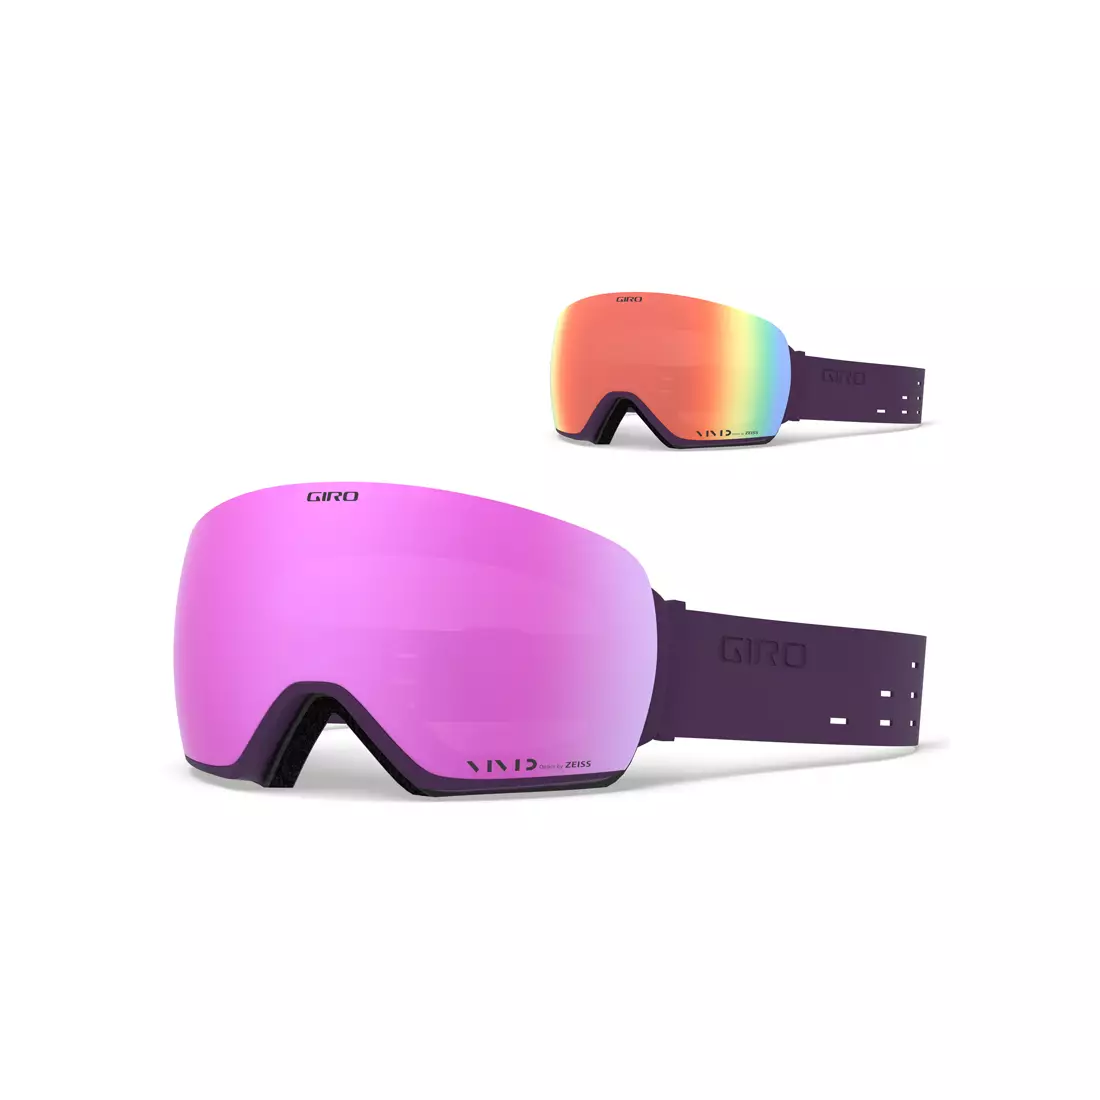 Ski / snowboard goggles women's GIRO LUSI SILICONE DUSTY PURPLE GR-7094603